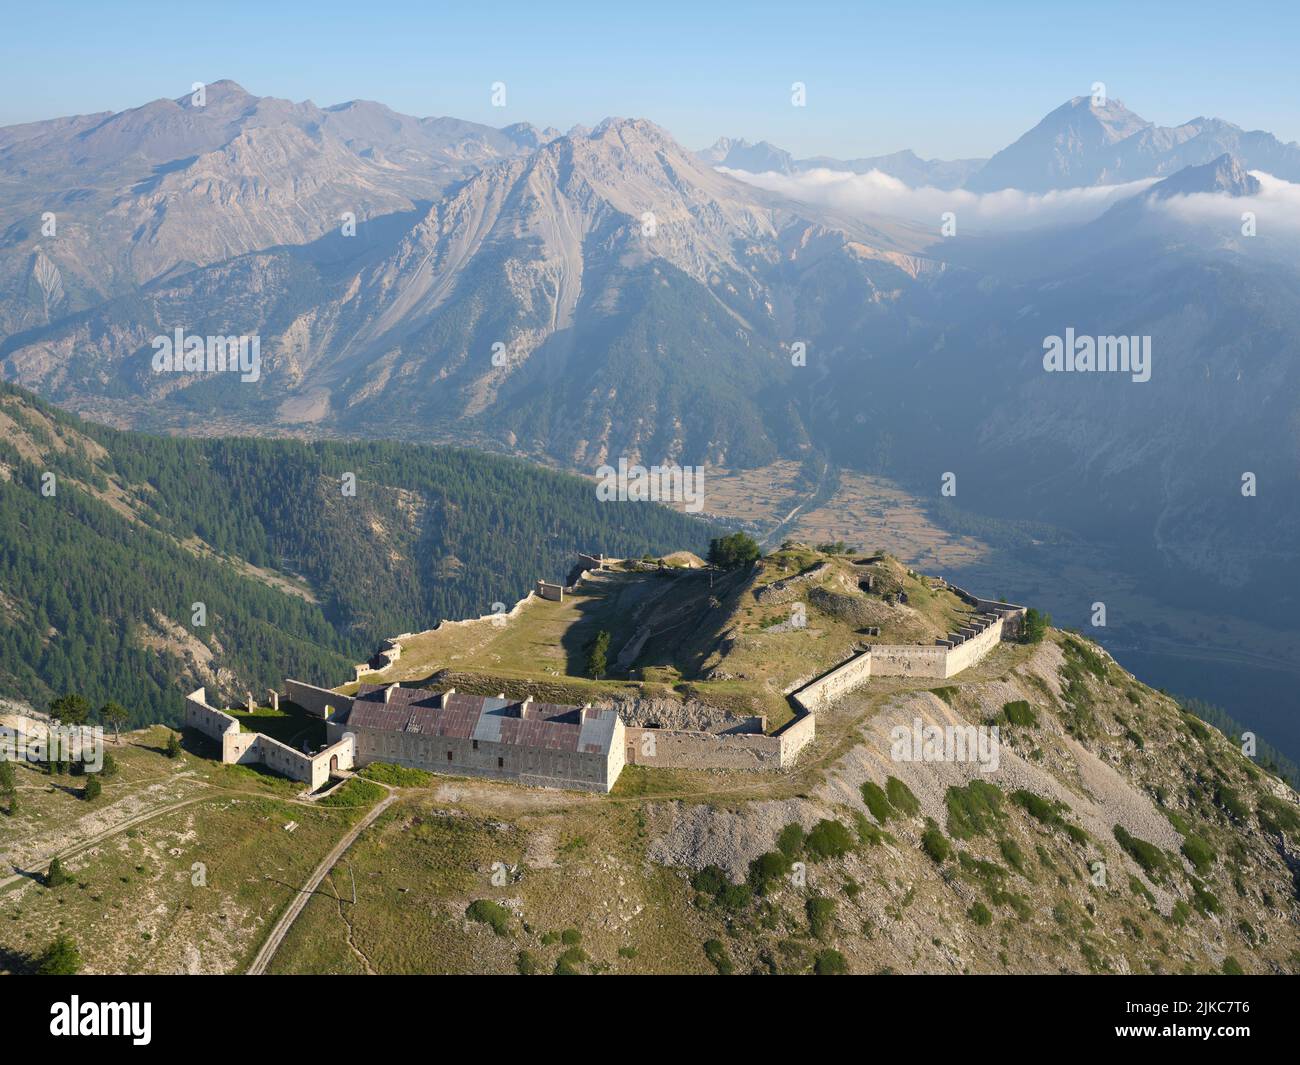 VISTA AEREA. Fort de l'Olive (altitudine: 2239 metri) si affaccia sulla valle Clarée. Névache, Côte Alpi, Provenza-Alpi-Costa Azzurra, Francia. Foto Stock